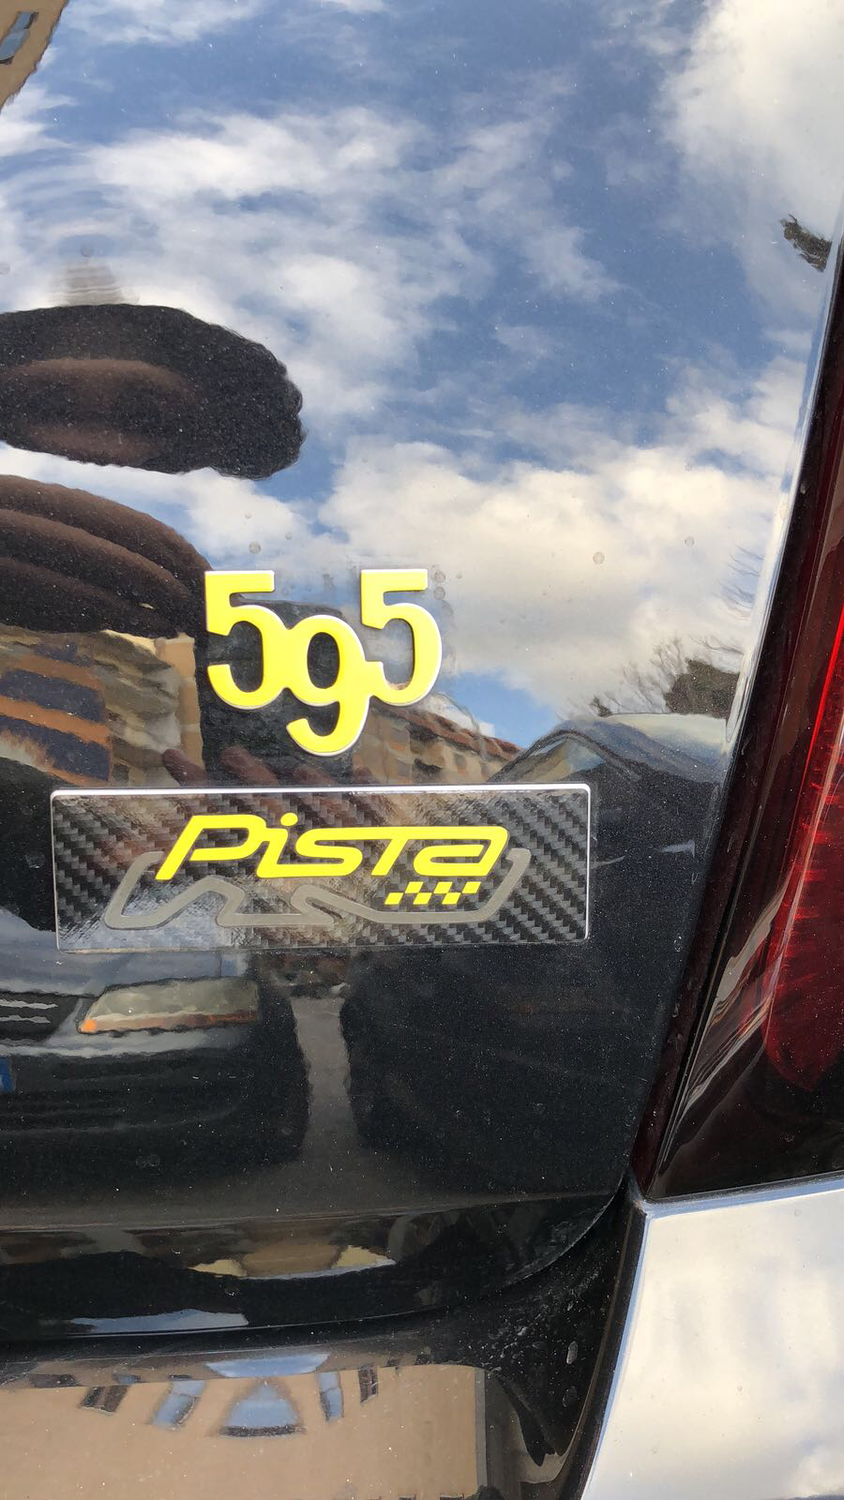 Adesivo Logo “PISTA o YAMAHA RACING” Personalizzato